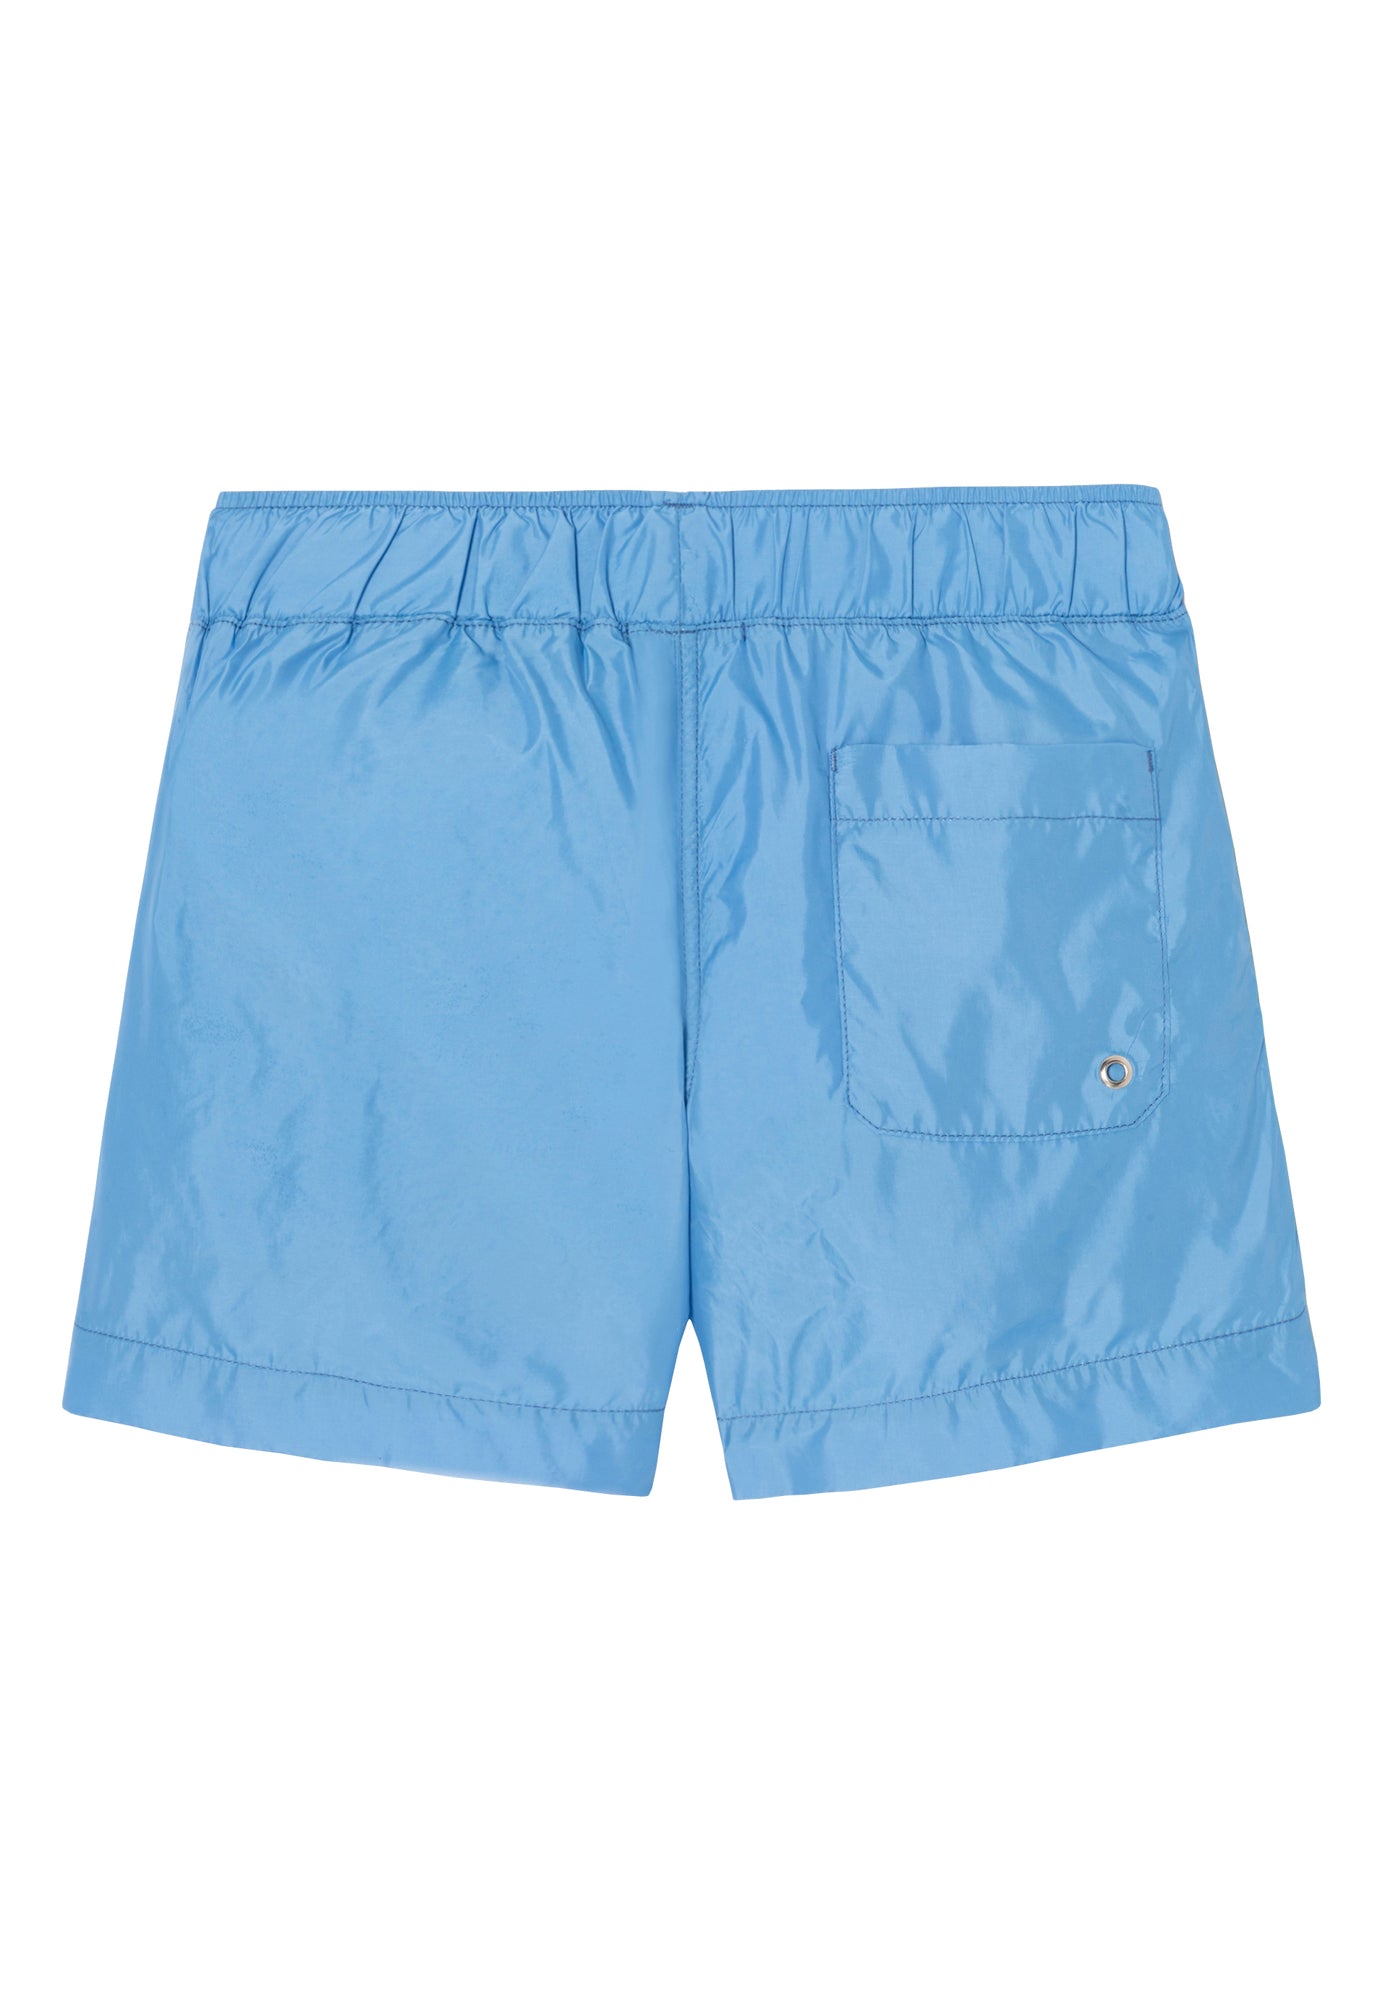 Boys' sky blue swim shorts